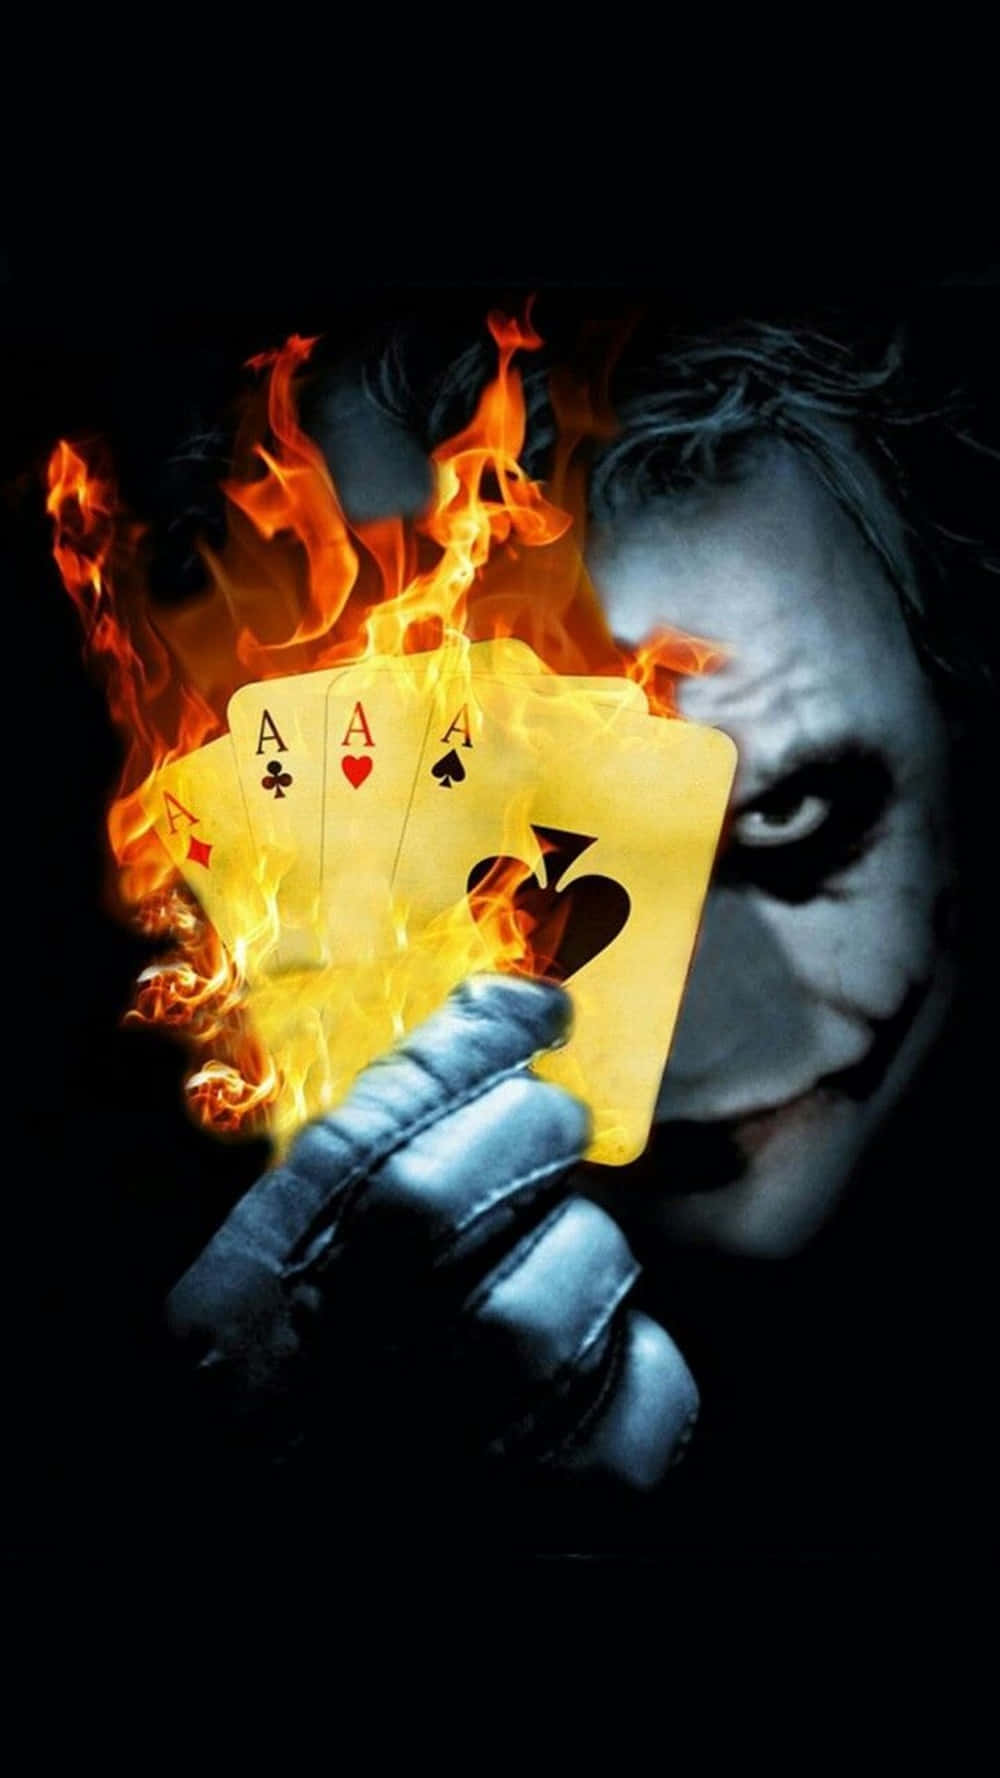 Download Dangerous Joker Scary Cards Fire Wallpaper | Wallpapers.com